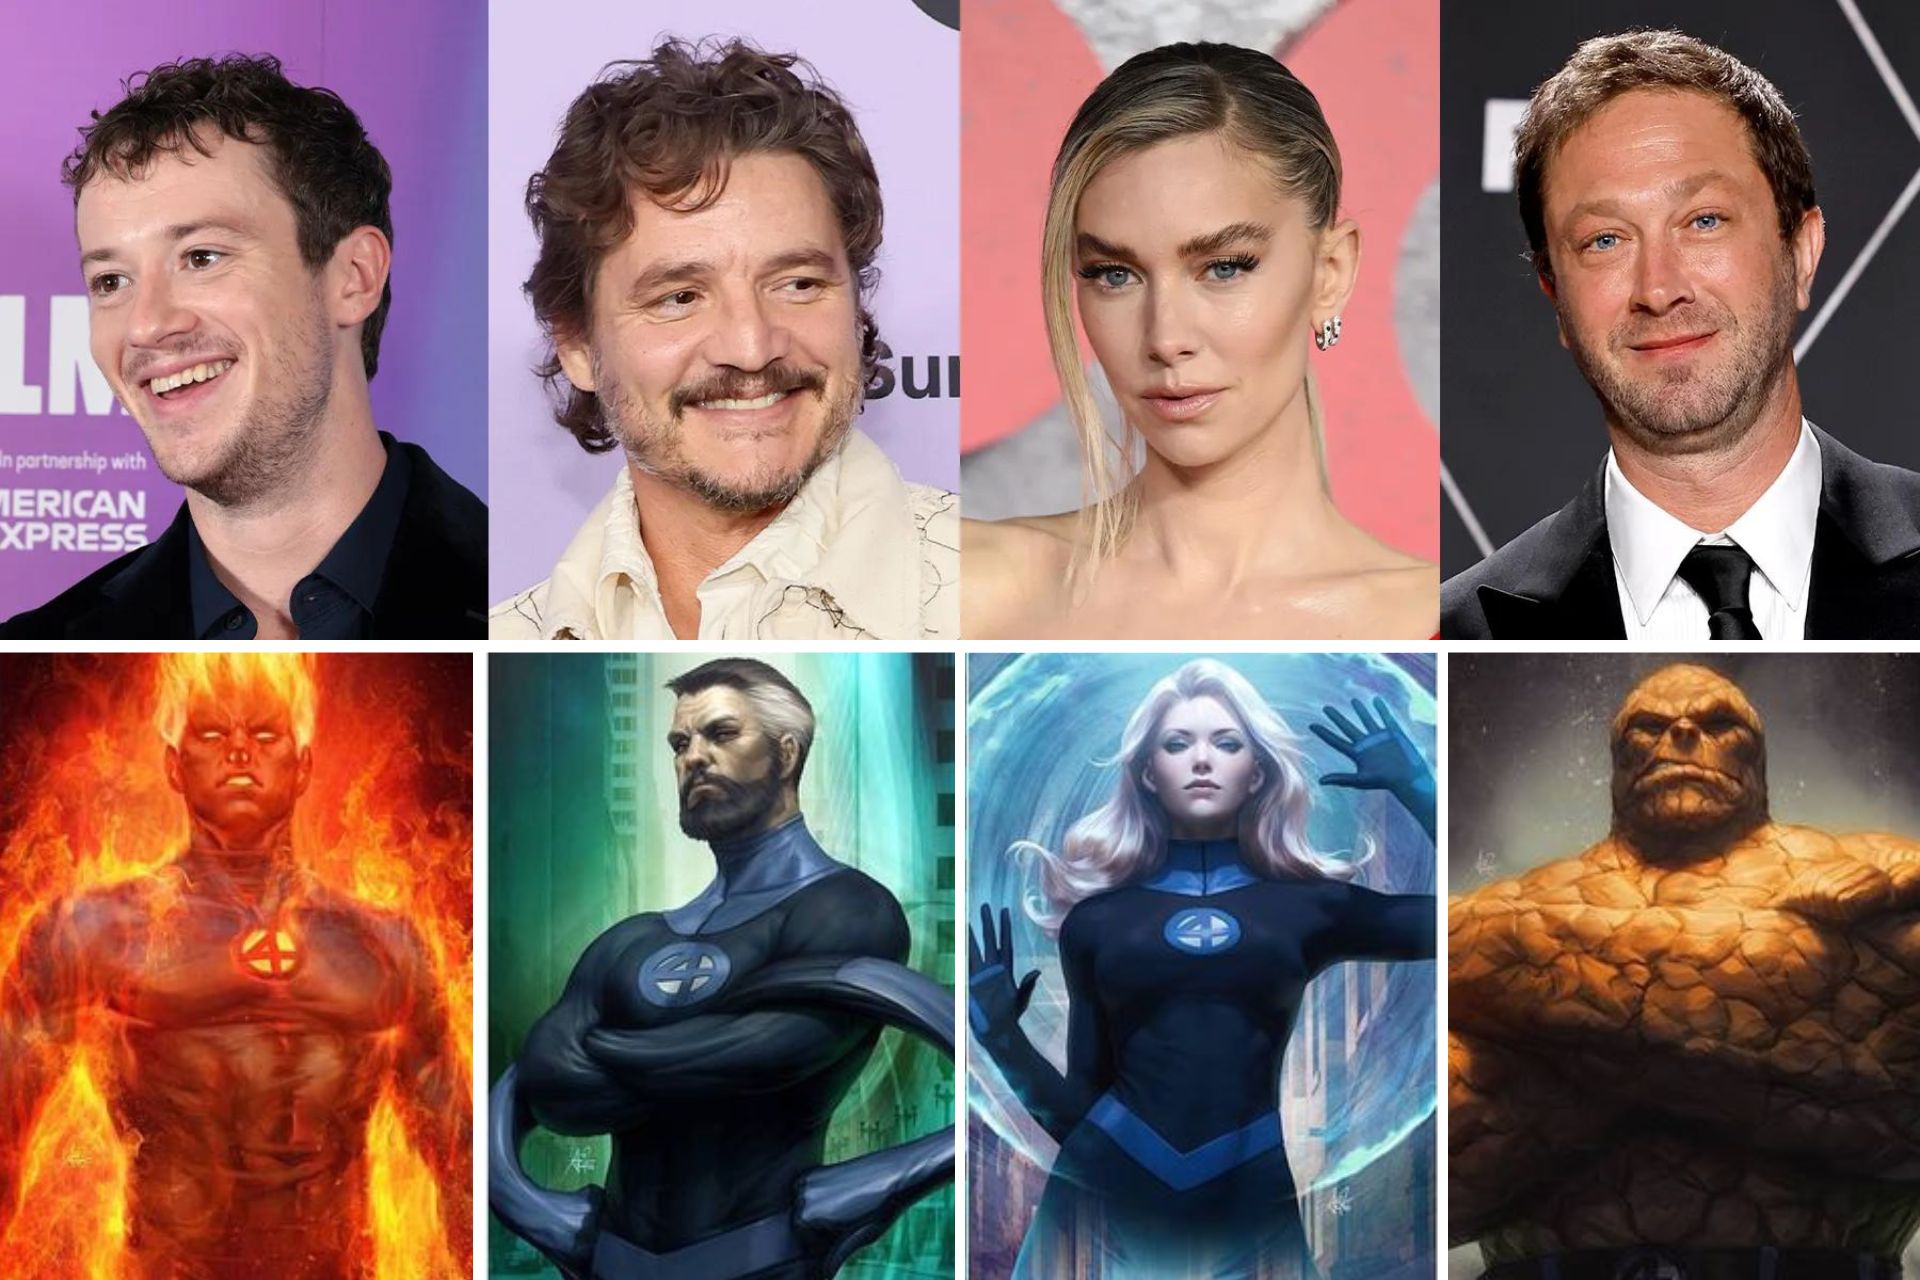 Le castting du futur film Marvel Les Quatre Fantastiques